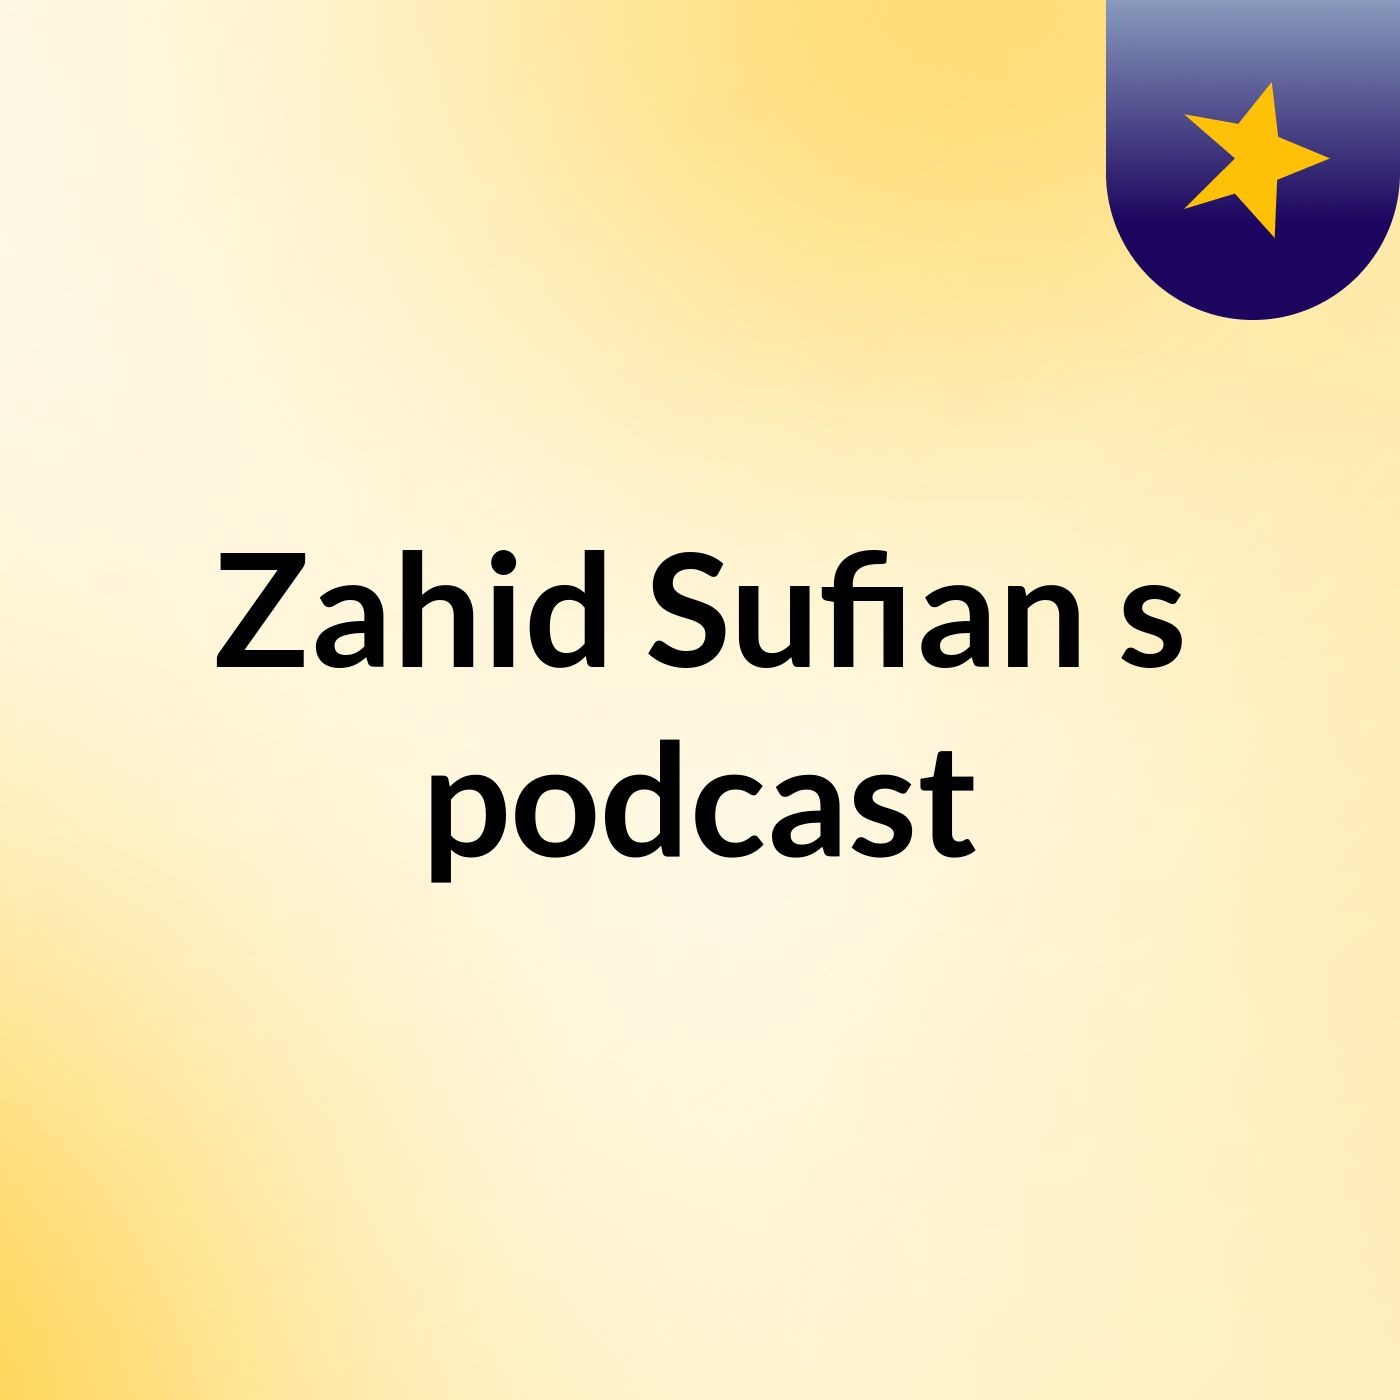 Zahid Sufian's podcast